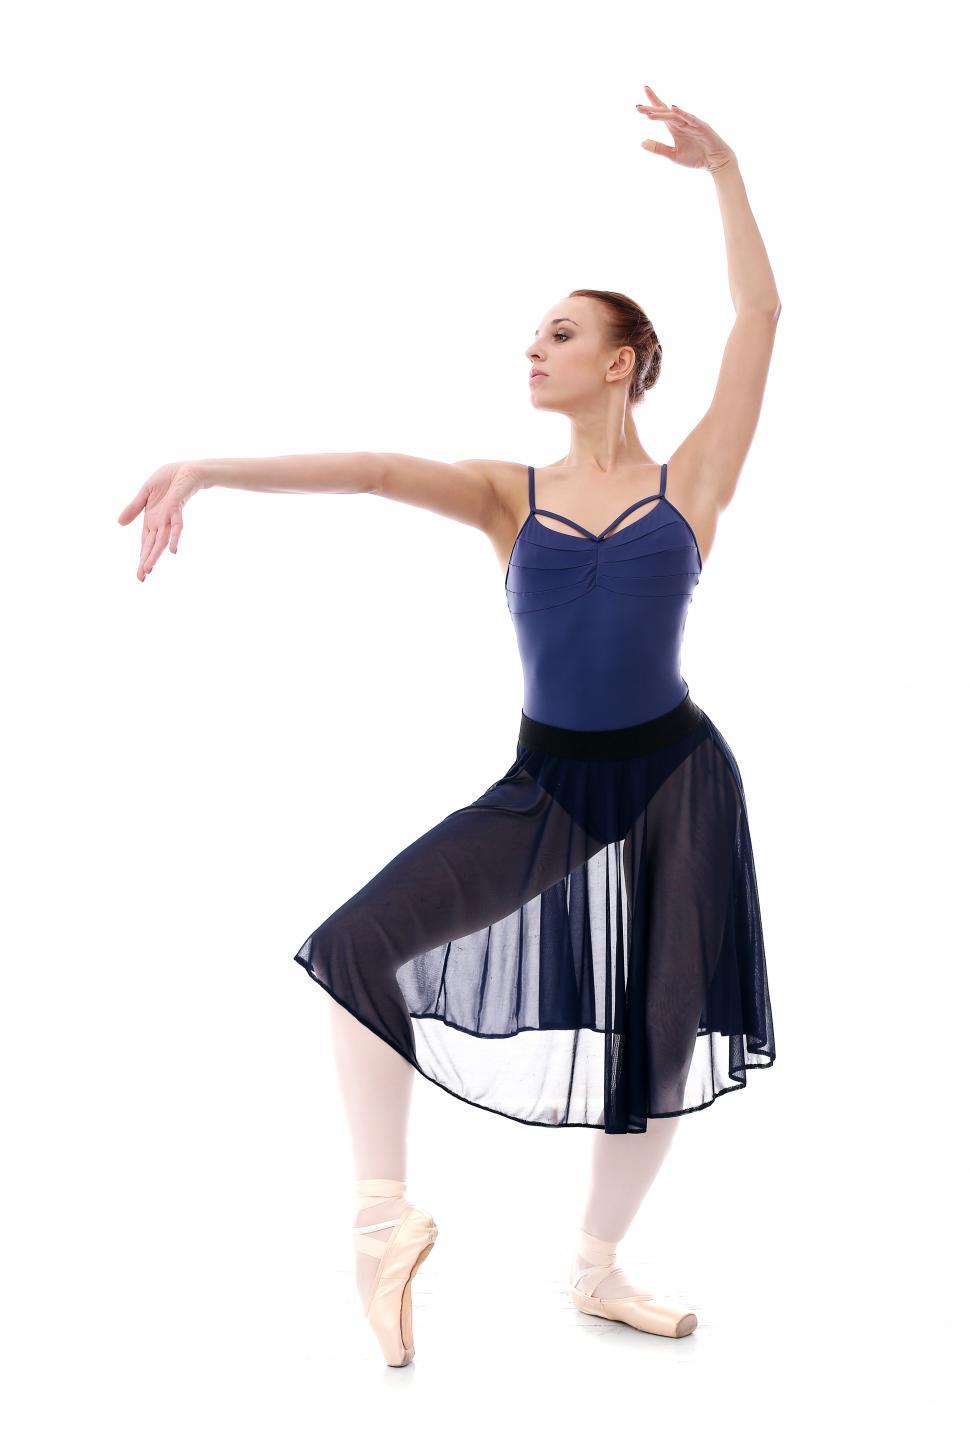 Free Image of Elegant ballerina dancing against white background 